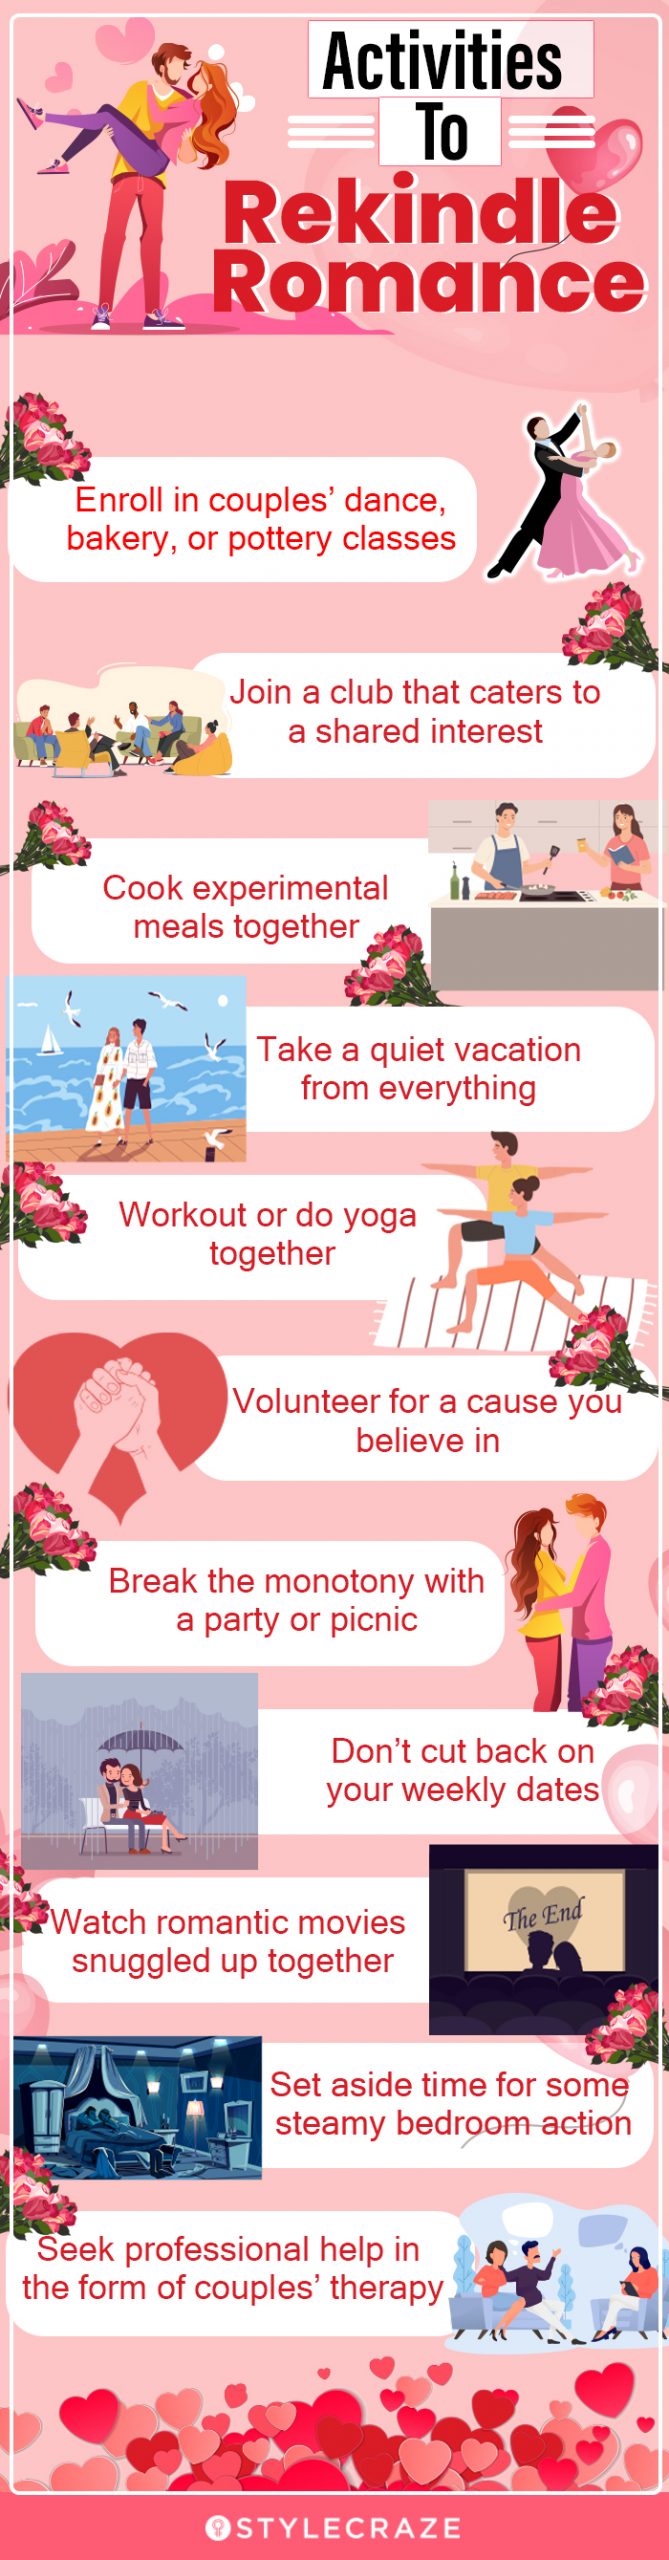 activities to rekindle romance (infographic)